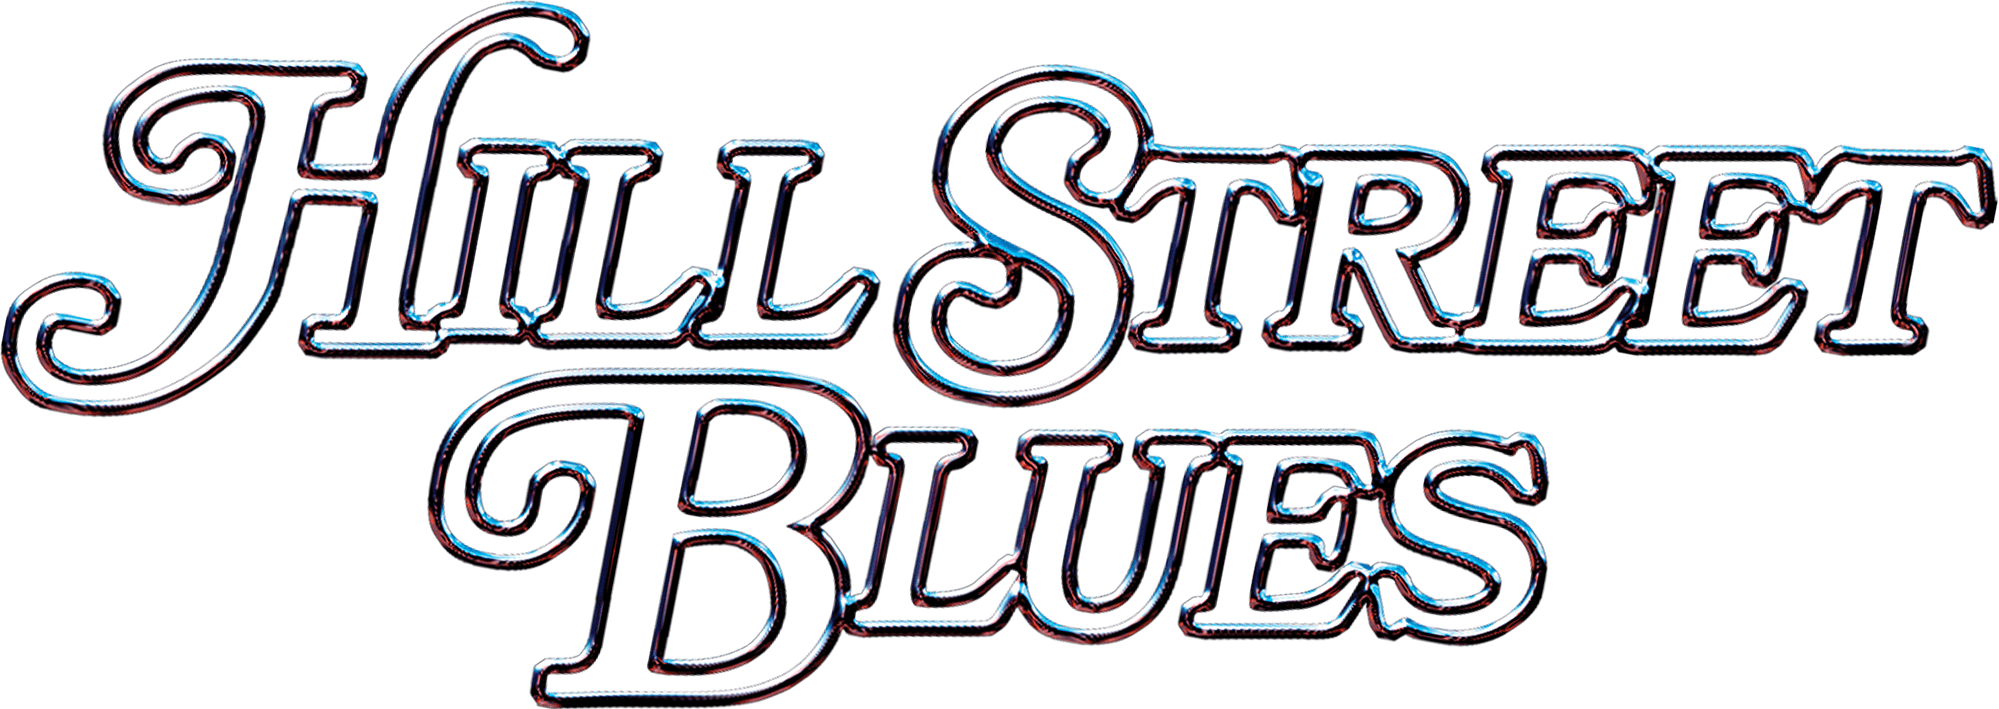 Hill Street Blues logo